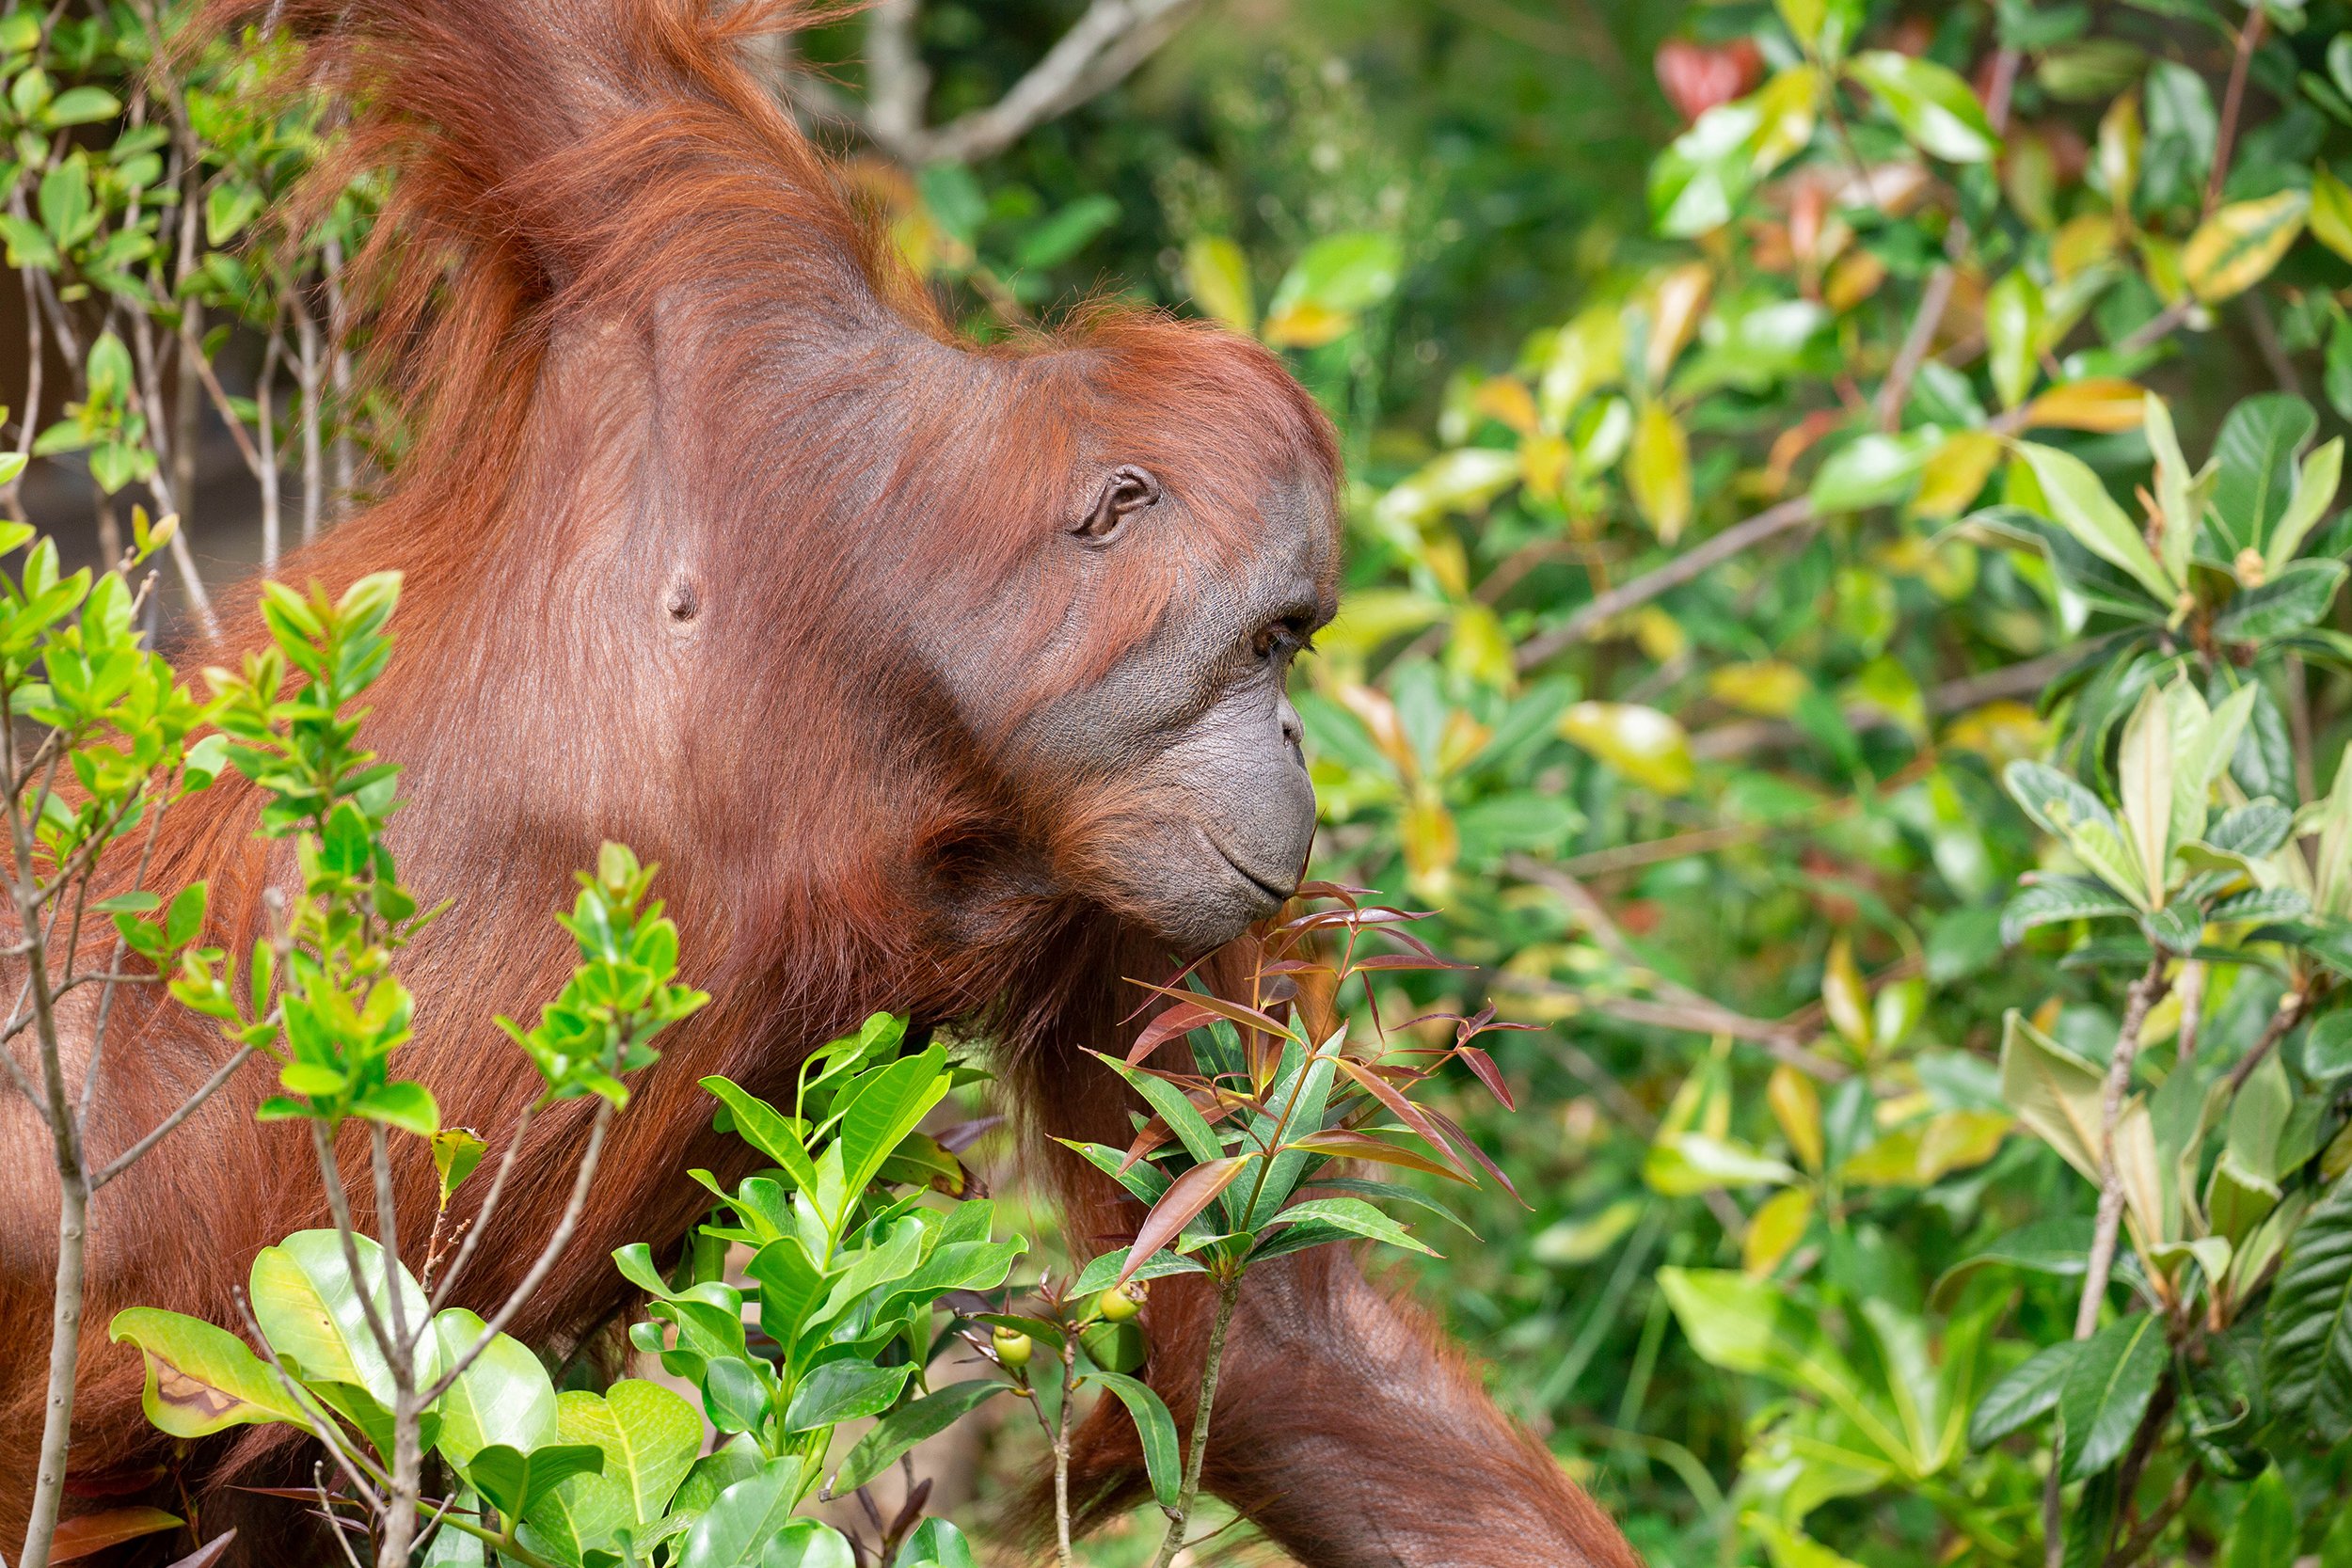 20A4746_female orangutan-w.jpg